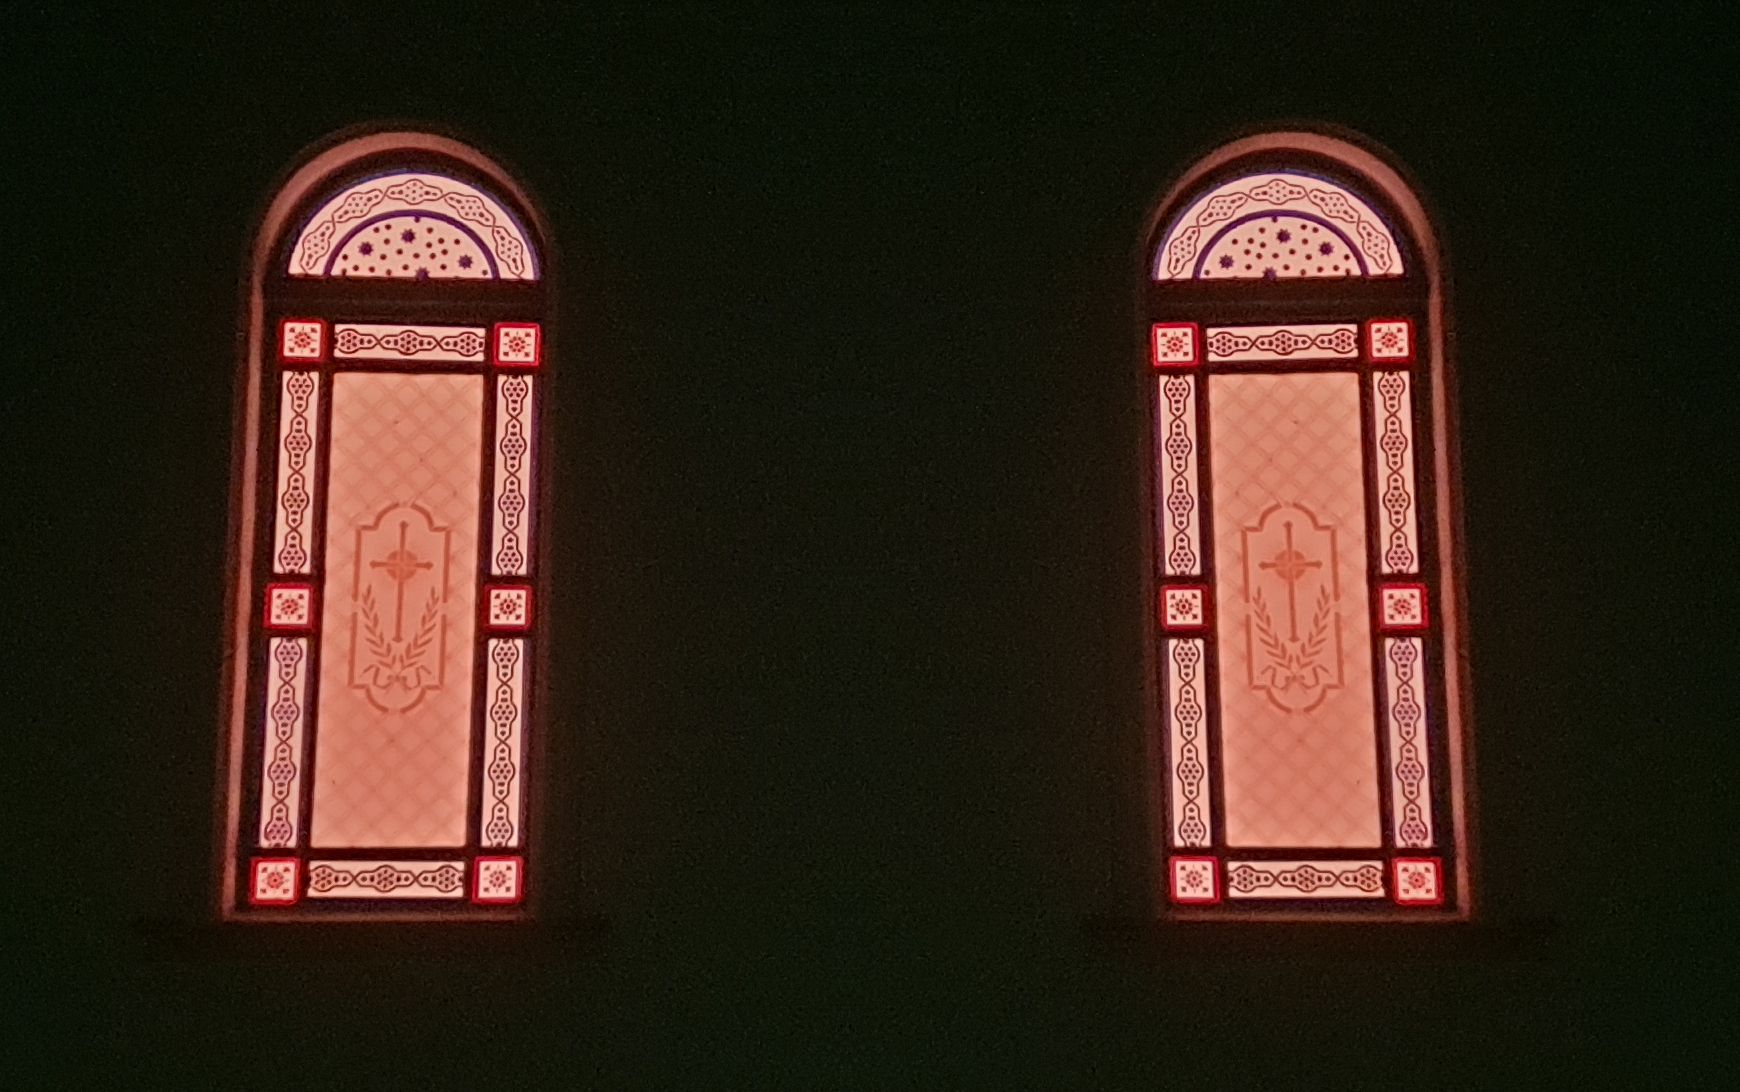 Adventfenster